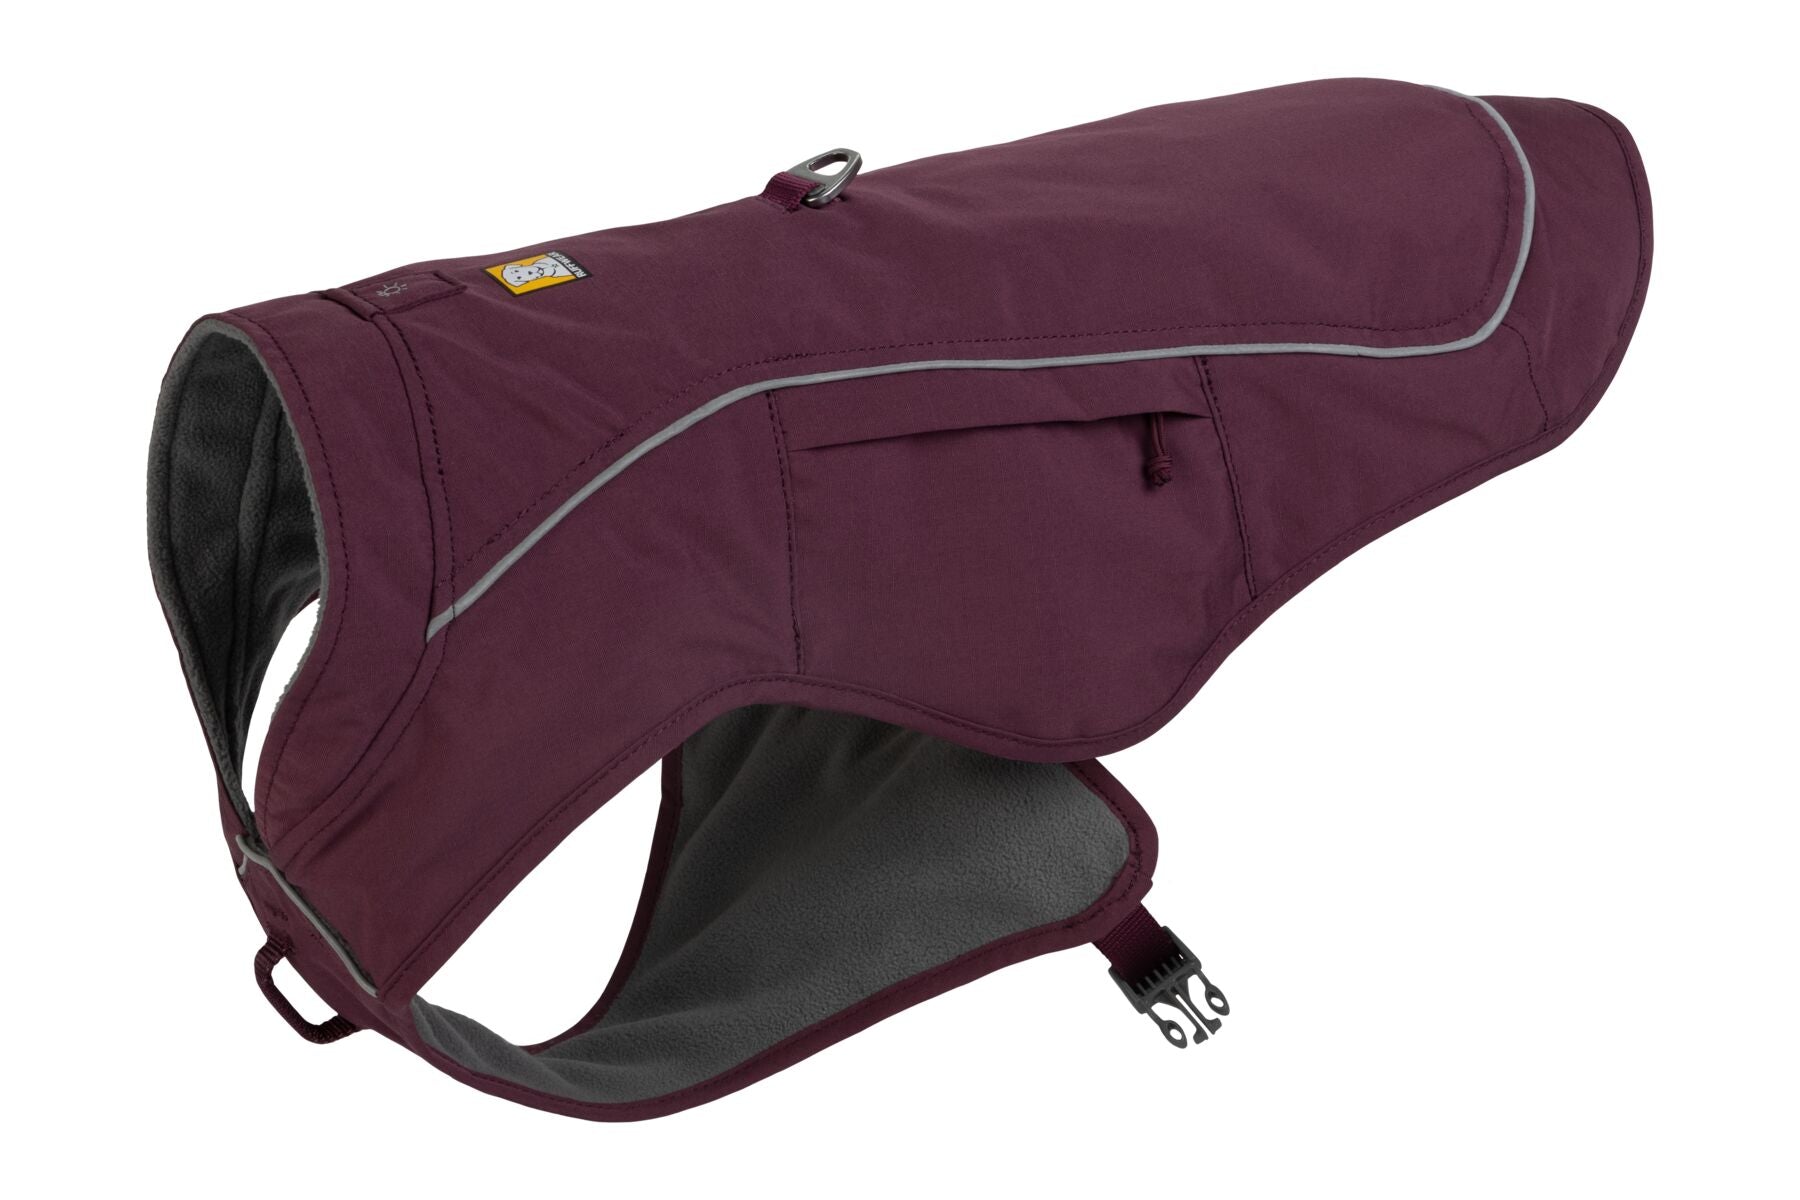 2 en 1 Abrigo Overcoat Fuse con Pechera Integrada en Púrpura (Purple Rain) de Ruffwear